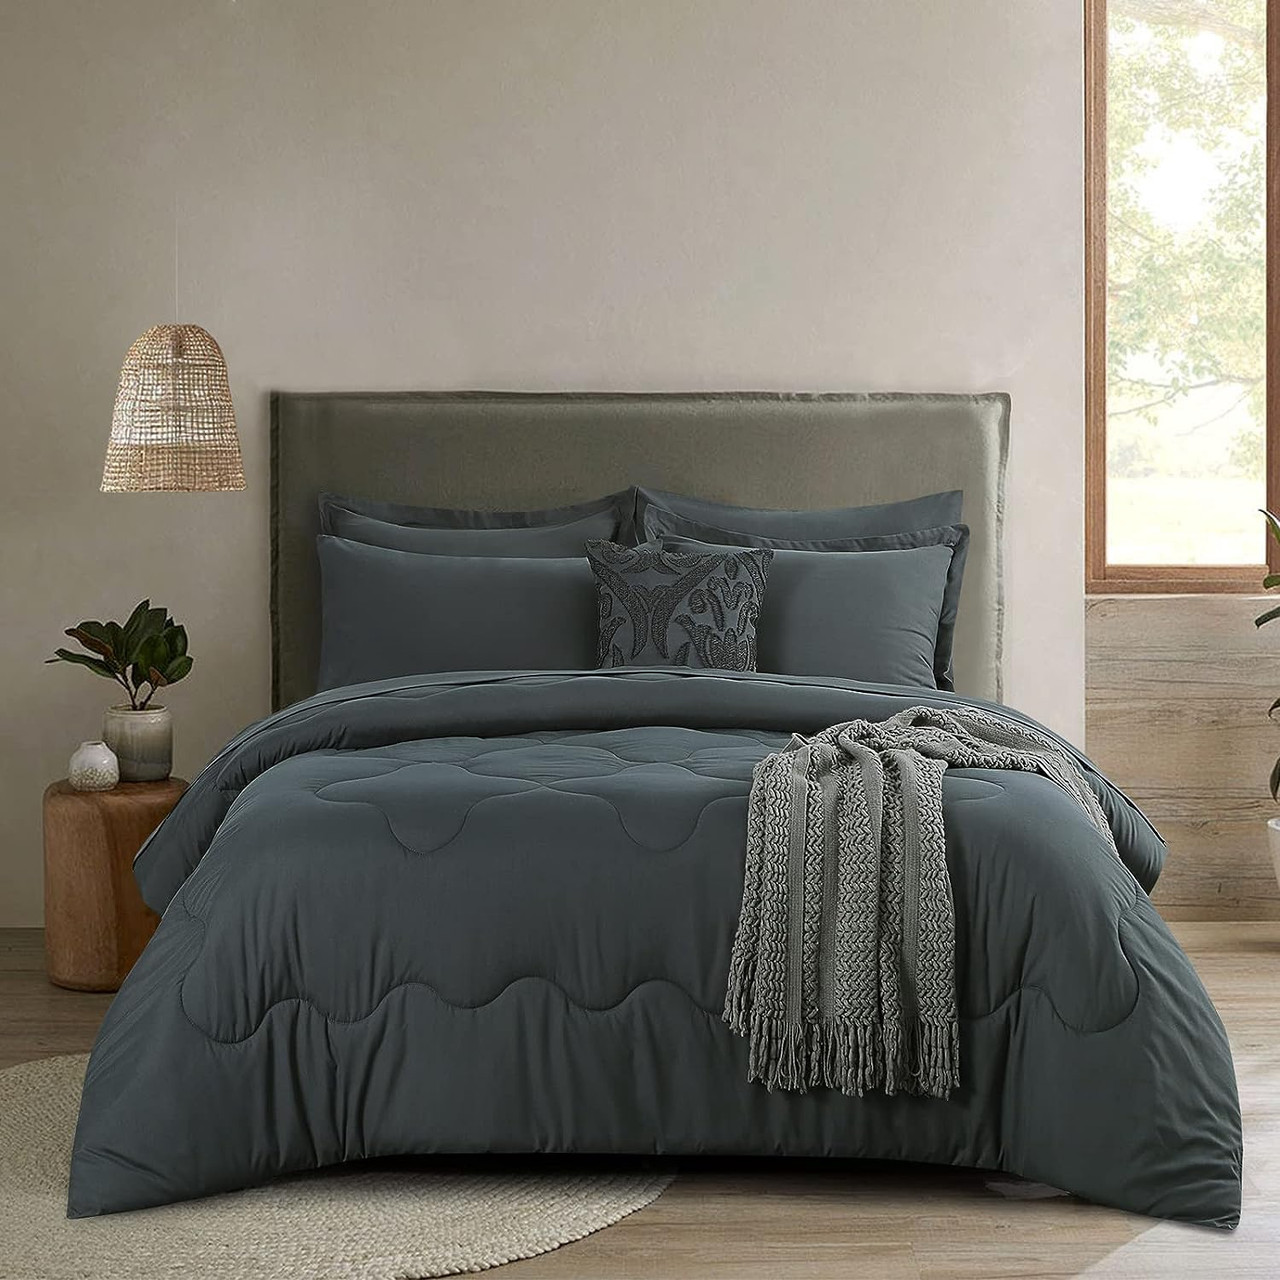 Utopia Bedding Twin XL Sheet Set (Quatrefoil Grey) - 1 Fitted Sheet, 1 Flat